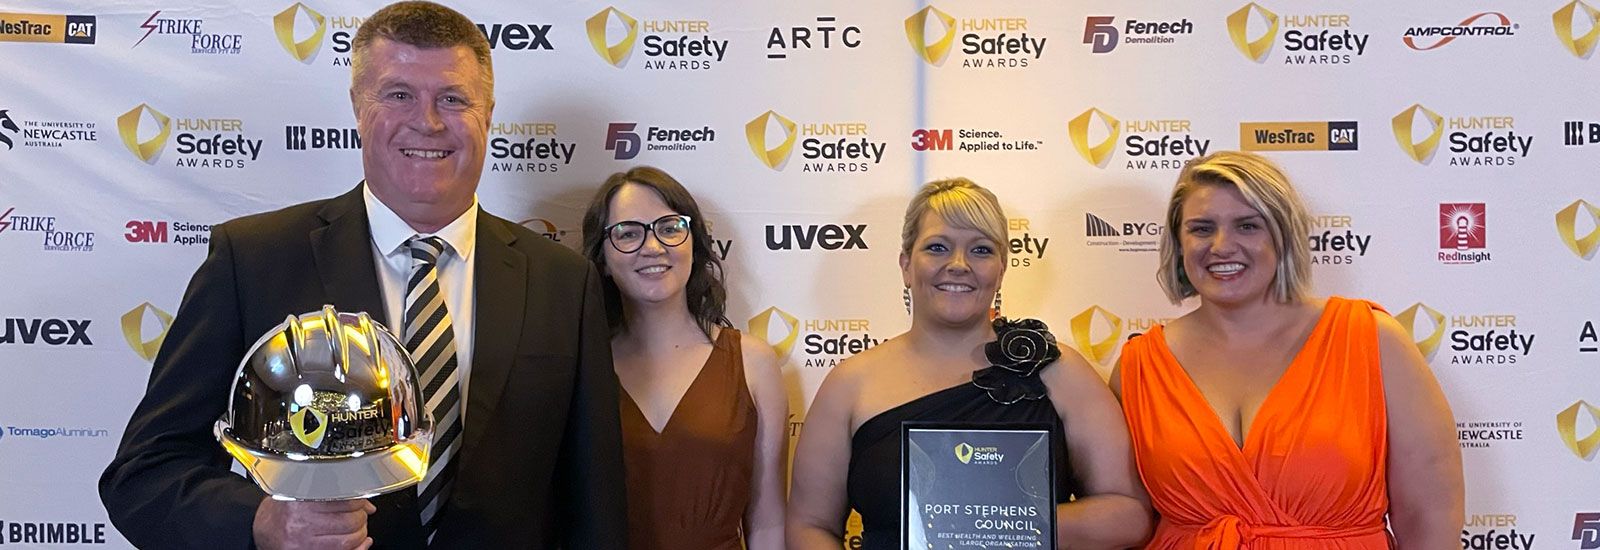 Hunter Safety Awards win banner image